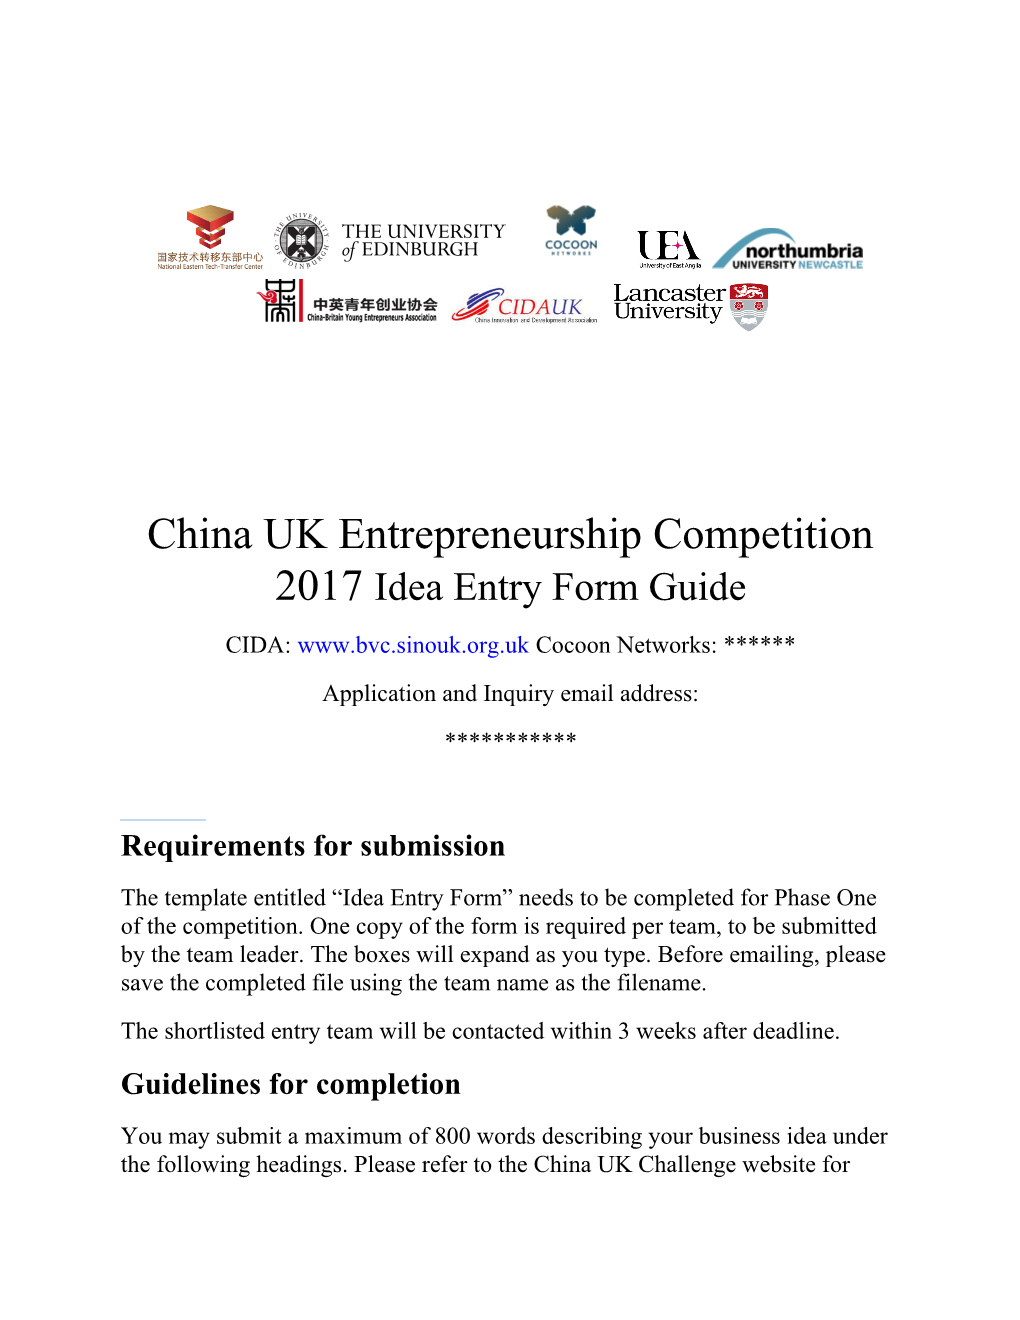 China UK Entrepreneurship Competition 2017Idea Entry Form Guide